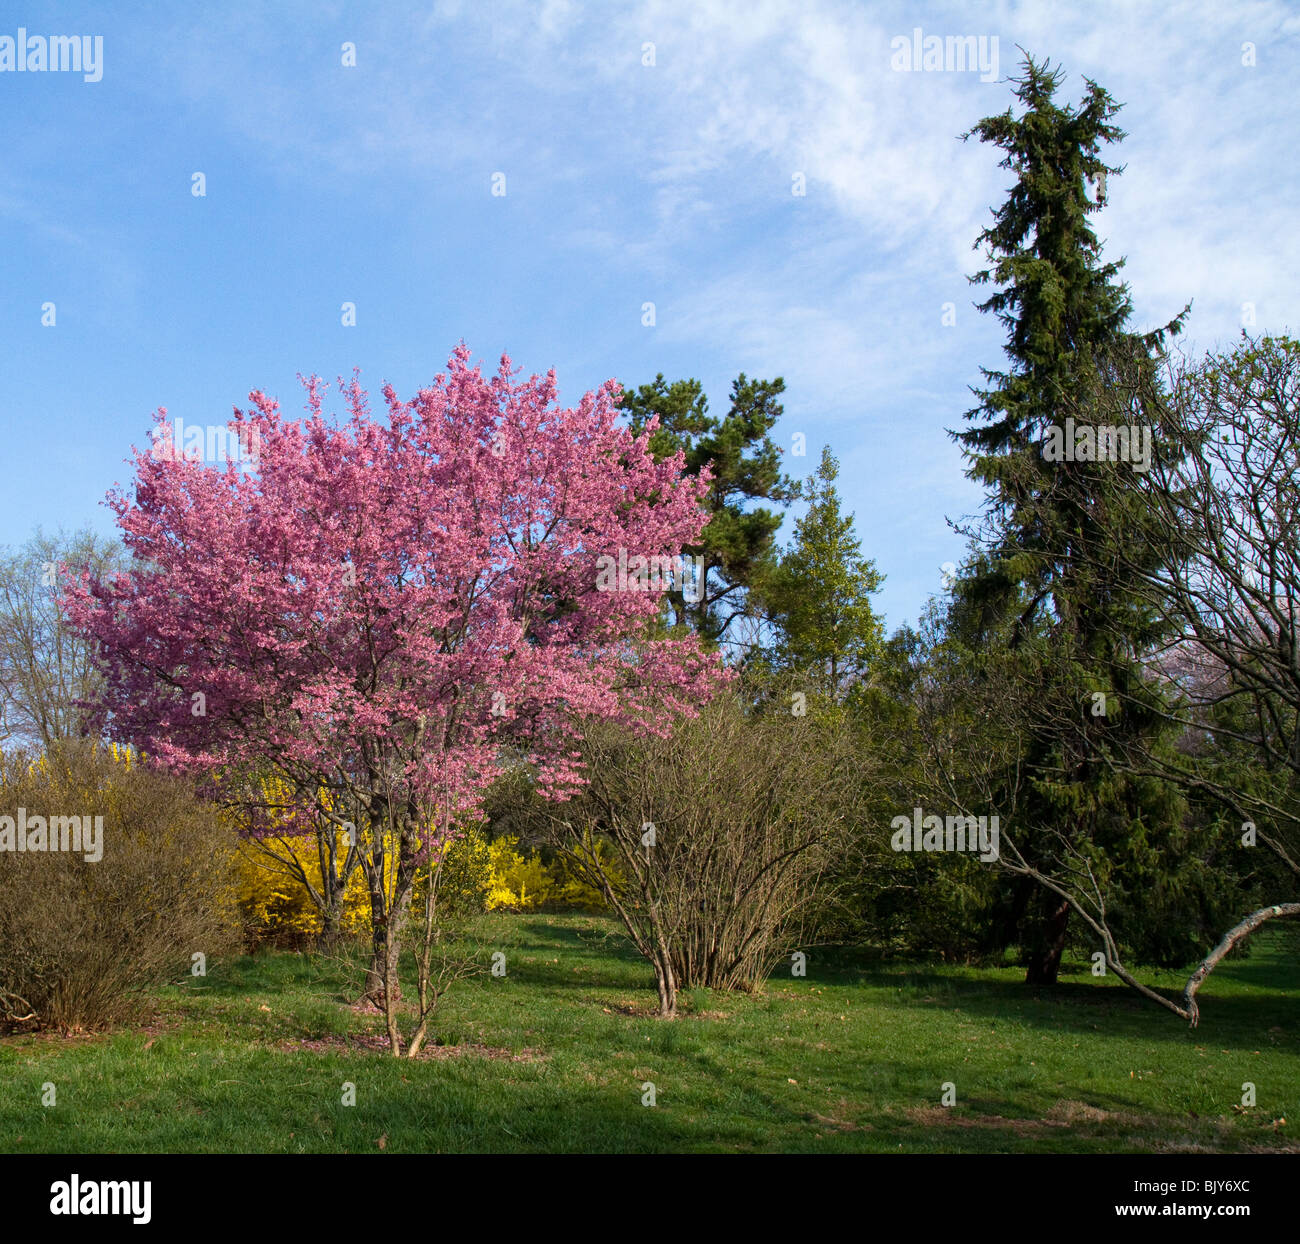 Prunus xblireiana hybrid rosaceae cherry tree in full bloom. In a park like setting. Stock Photo